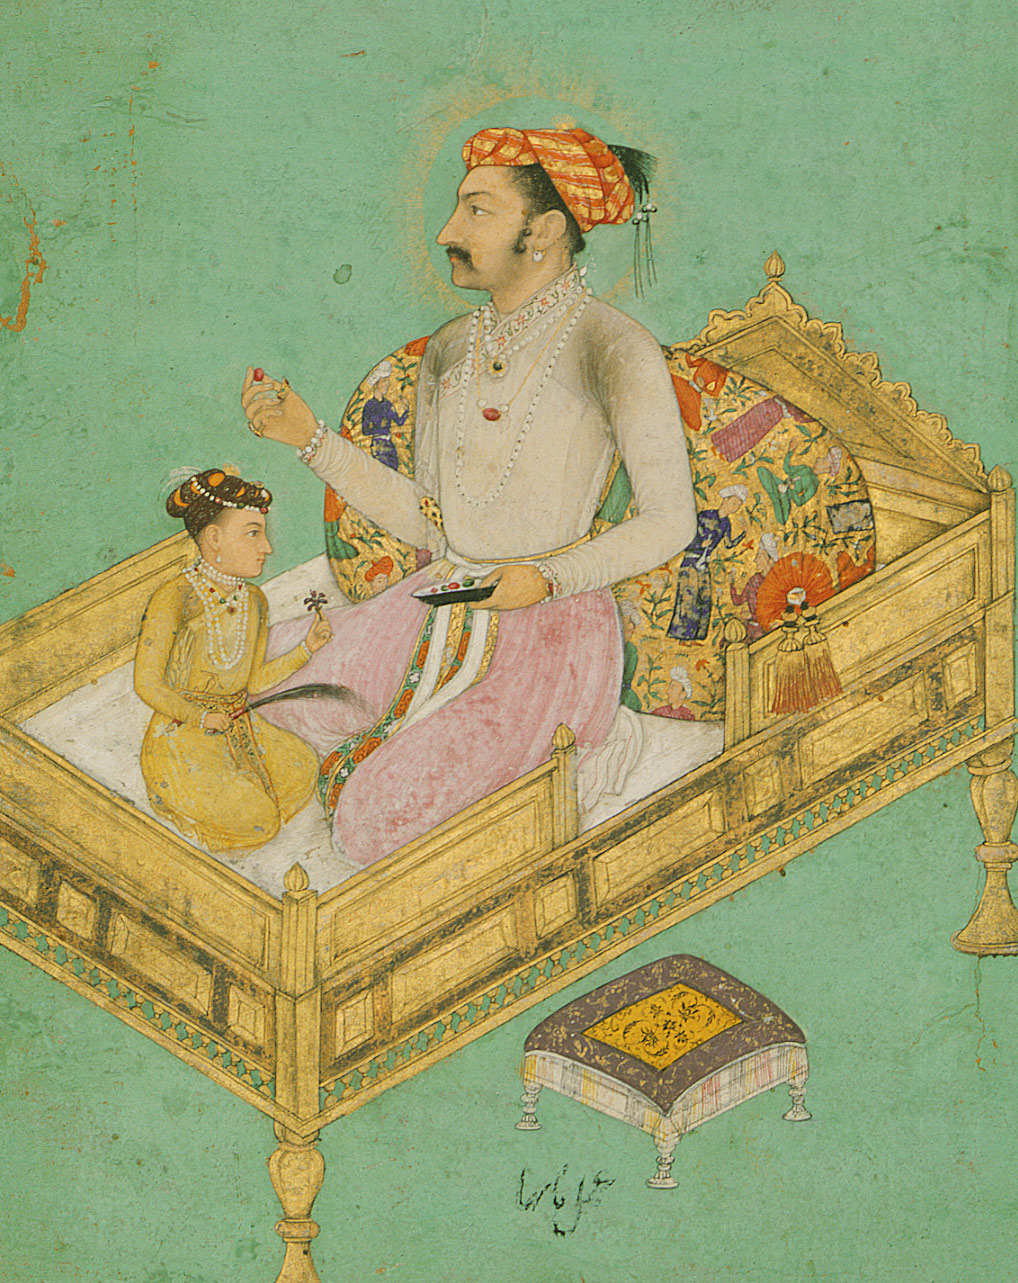 Prince Khurram (Shah Jahan) with His Son Dara Shikoh: